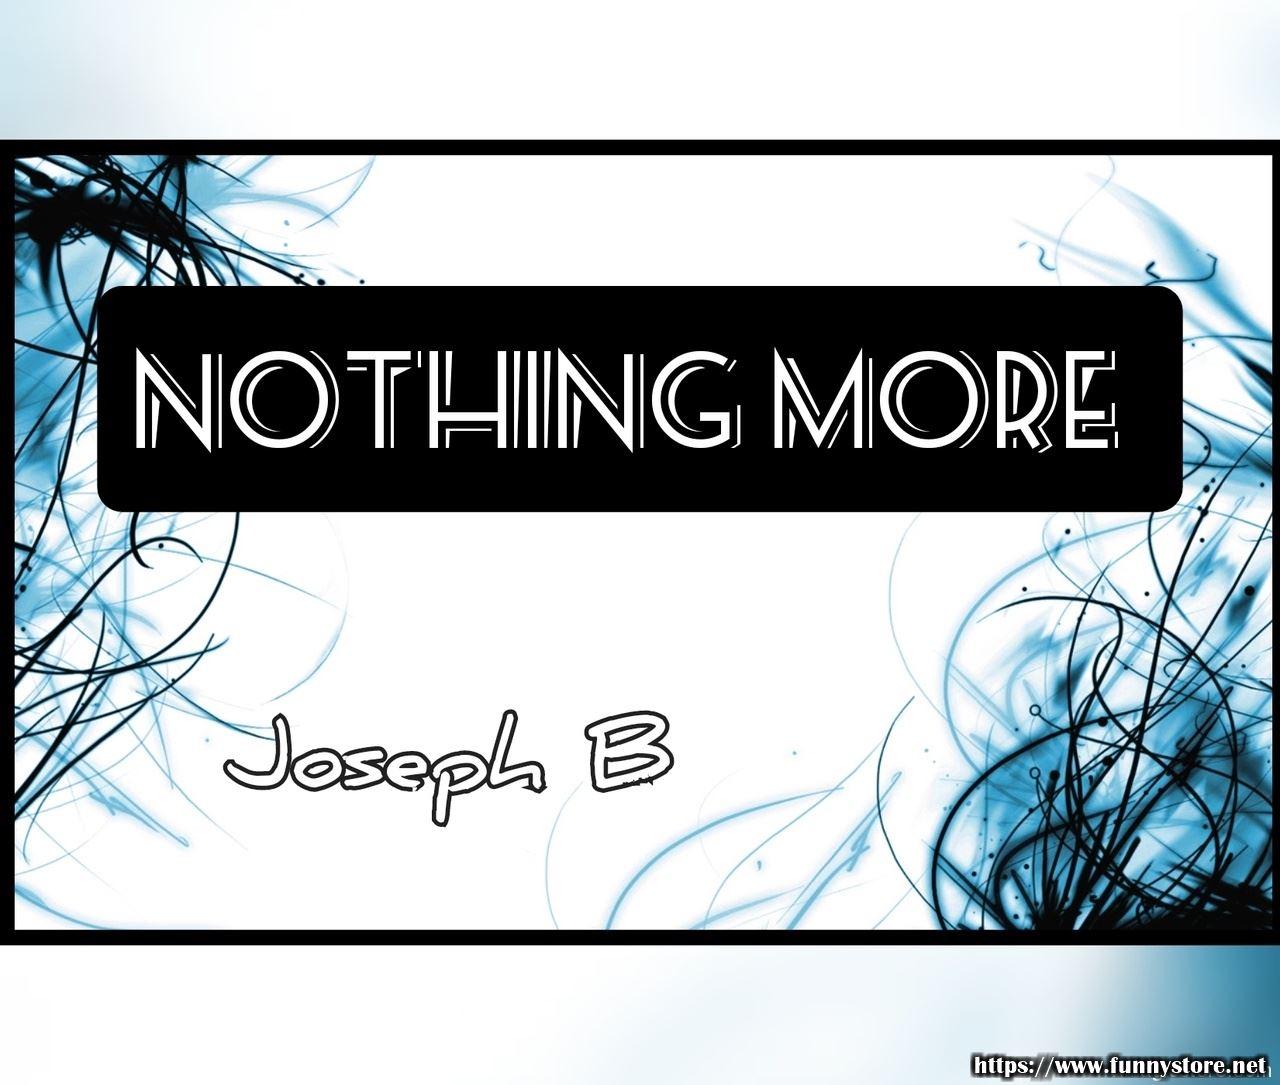 Joseph B. - Nothing More